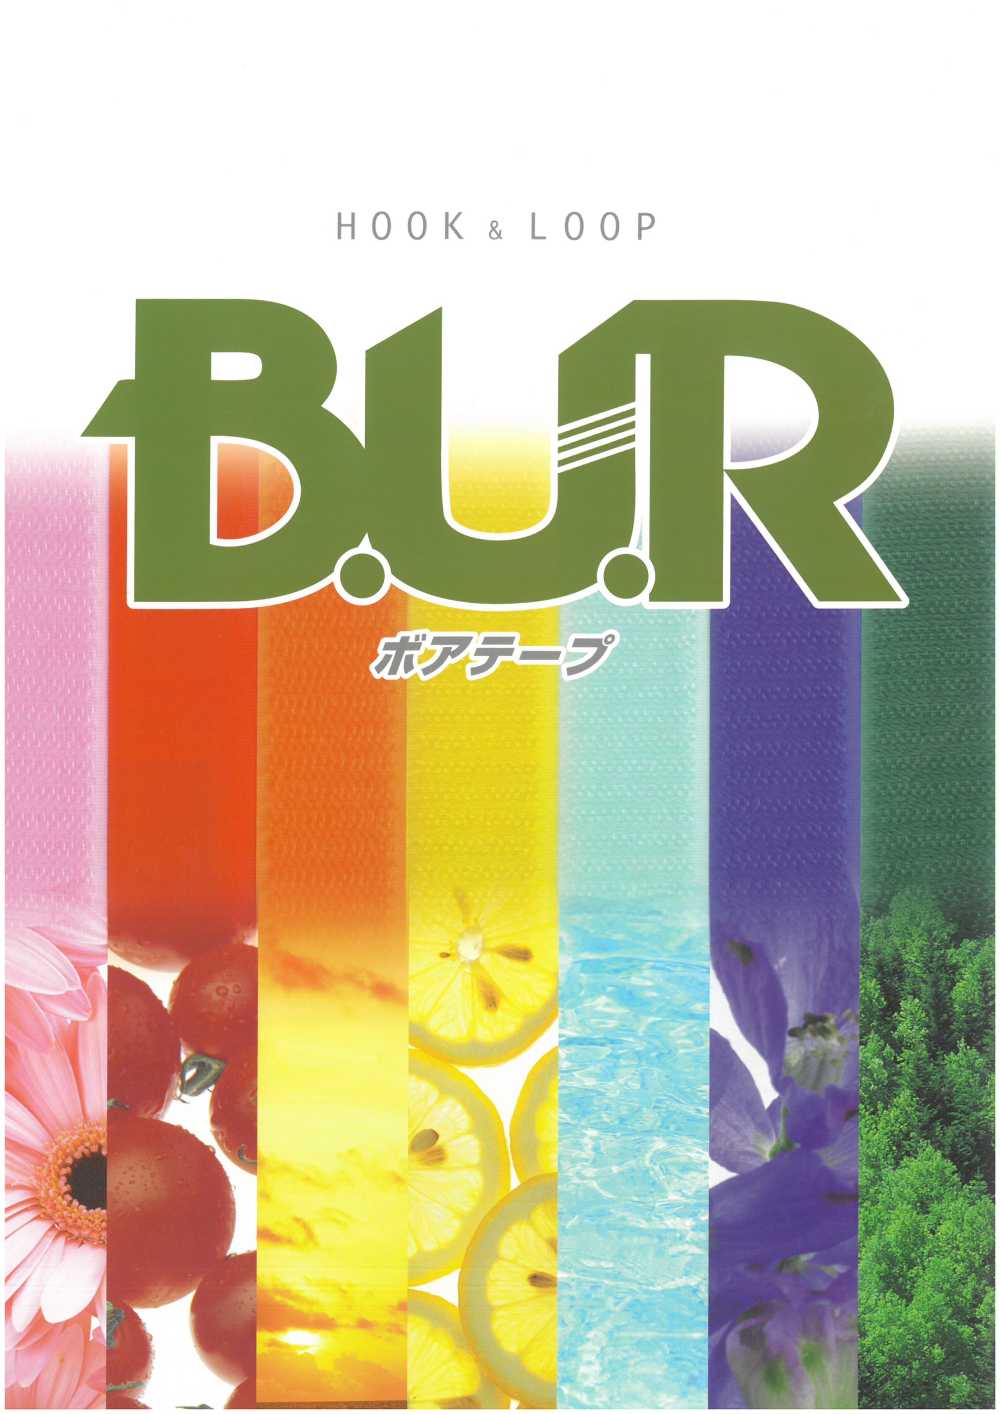 RA Boa Tape Hook And Loop A Side, En Nylon, Avec Type Adhésif En Caoutchouc[Fermeture éclair] B.U.R.